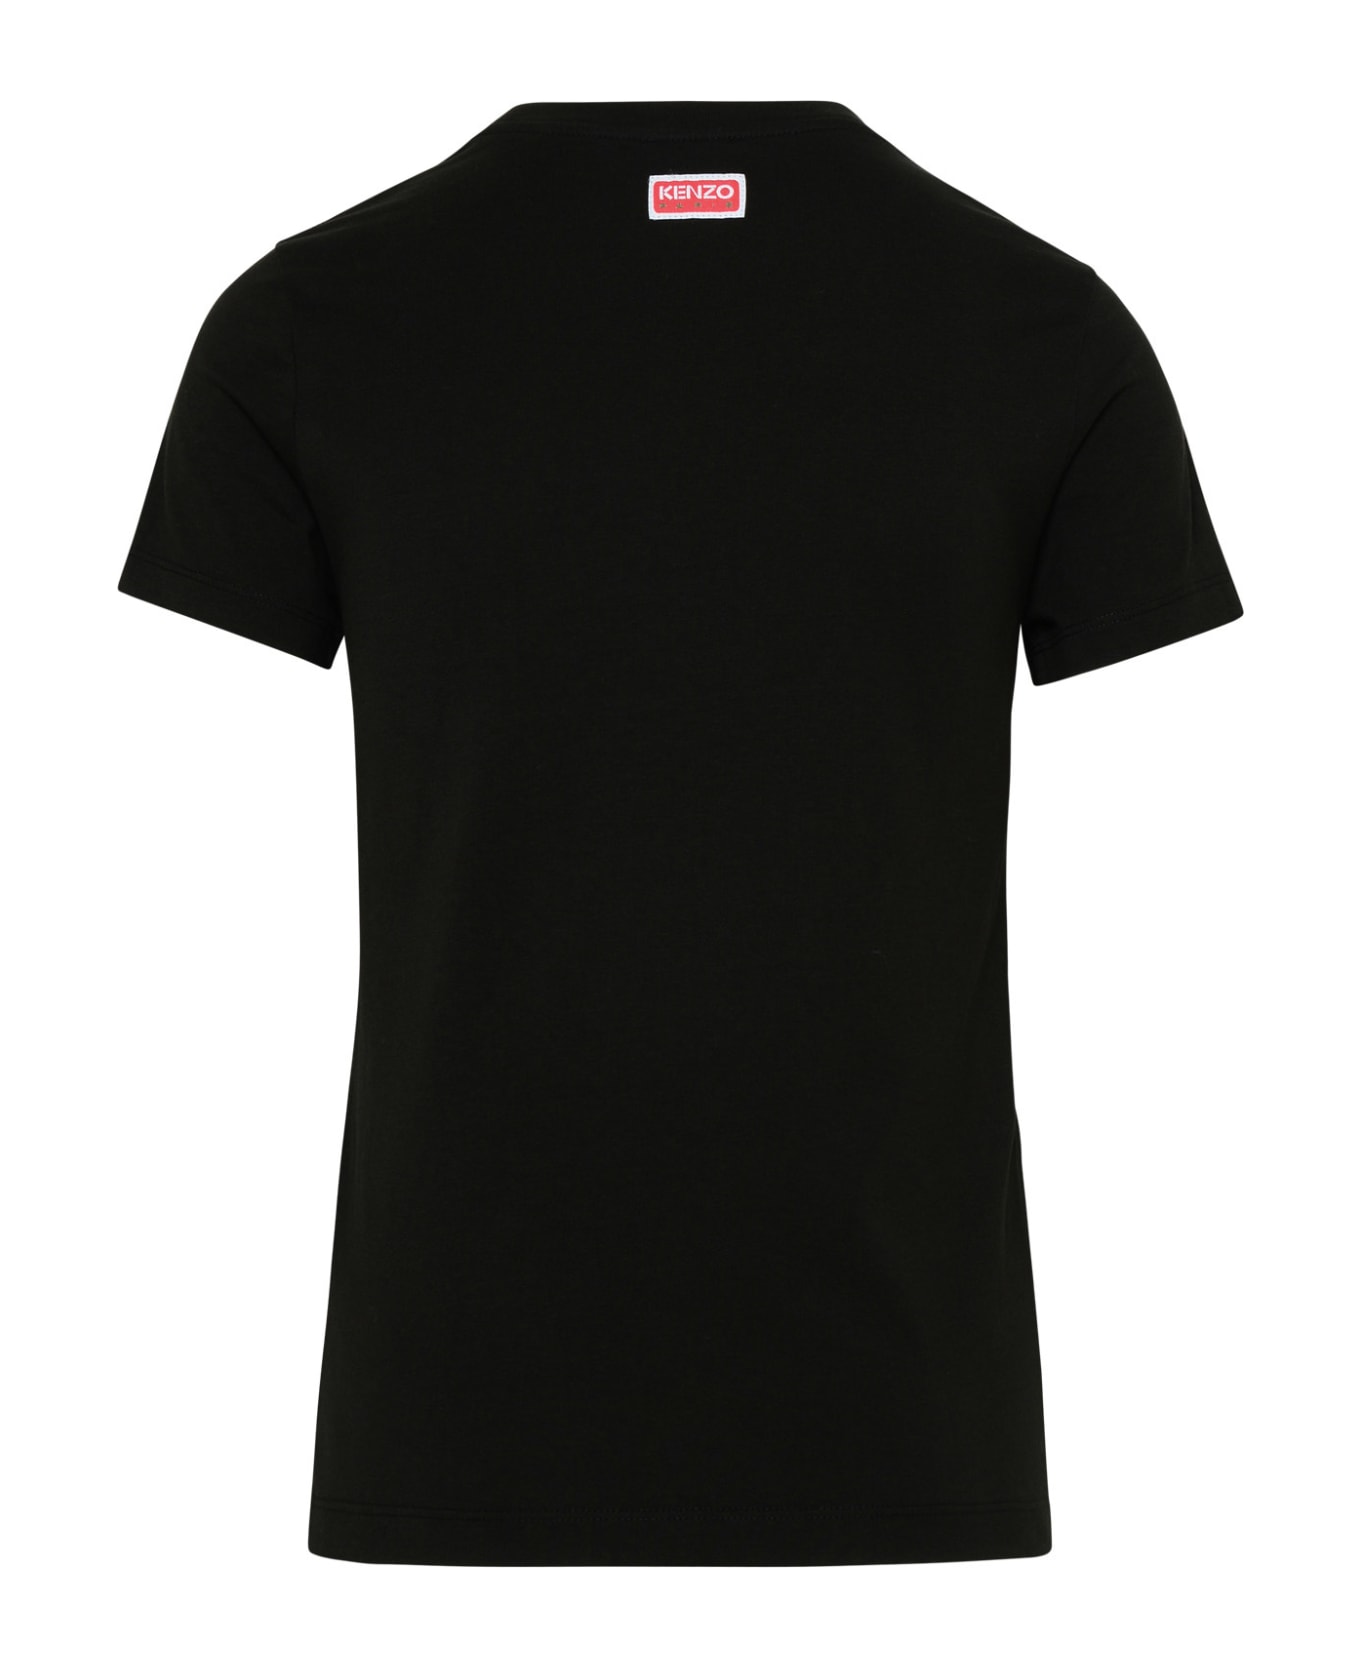 Kenzo Black Cotton T-shirt - Black Tシャツ